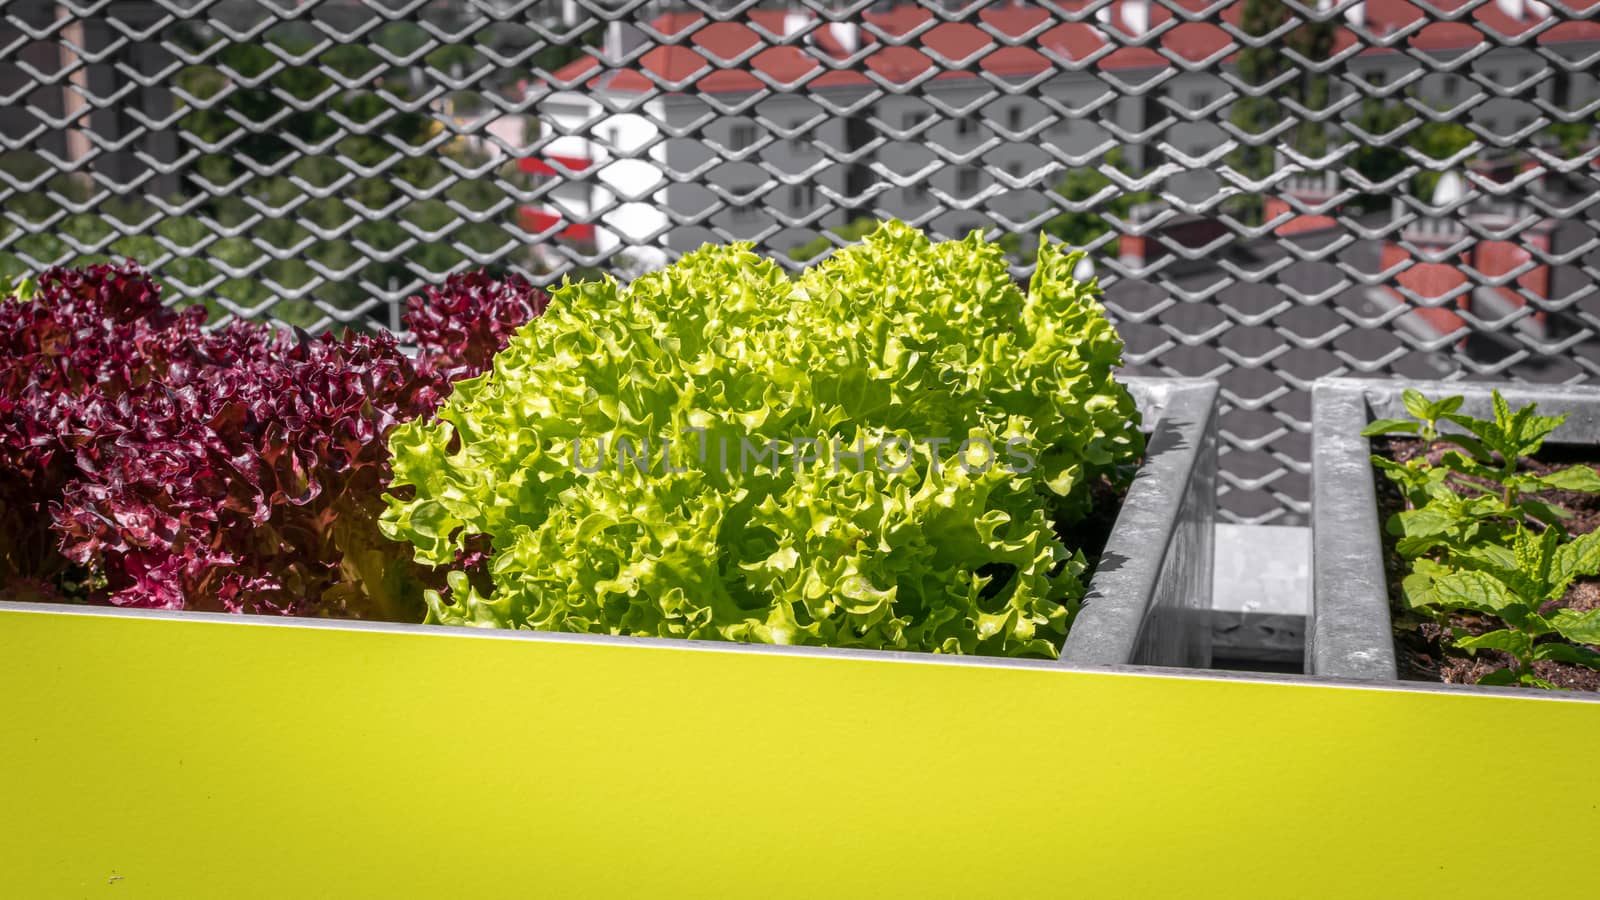 Urban gardening - Lollo bionda and Lollo rosso lettuce and mint in stylish planters on a terrace in Vienna (Austria) by Umtsga